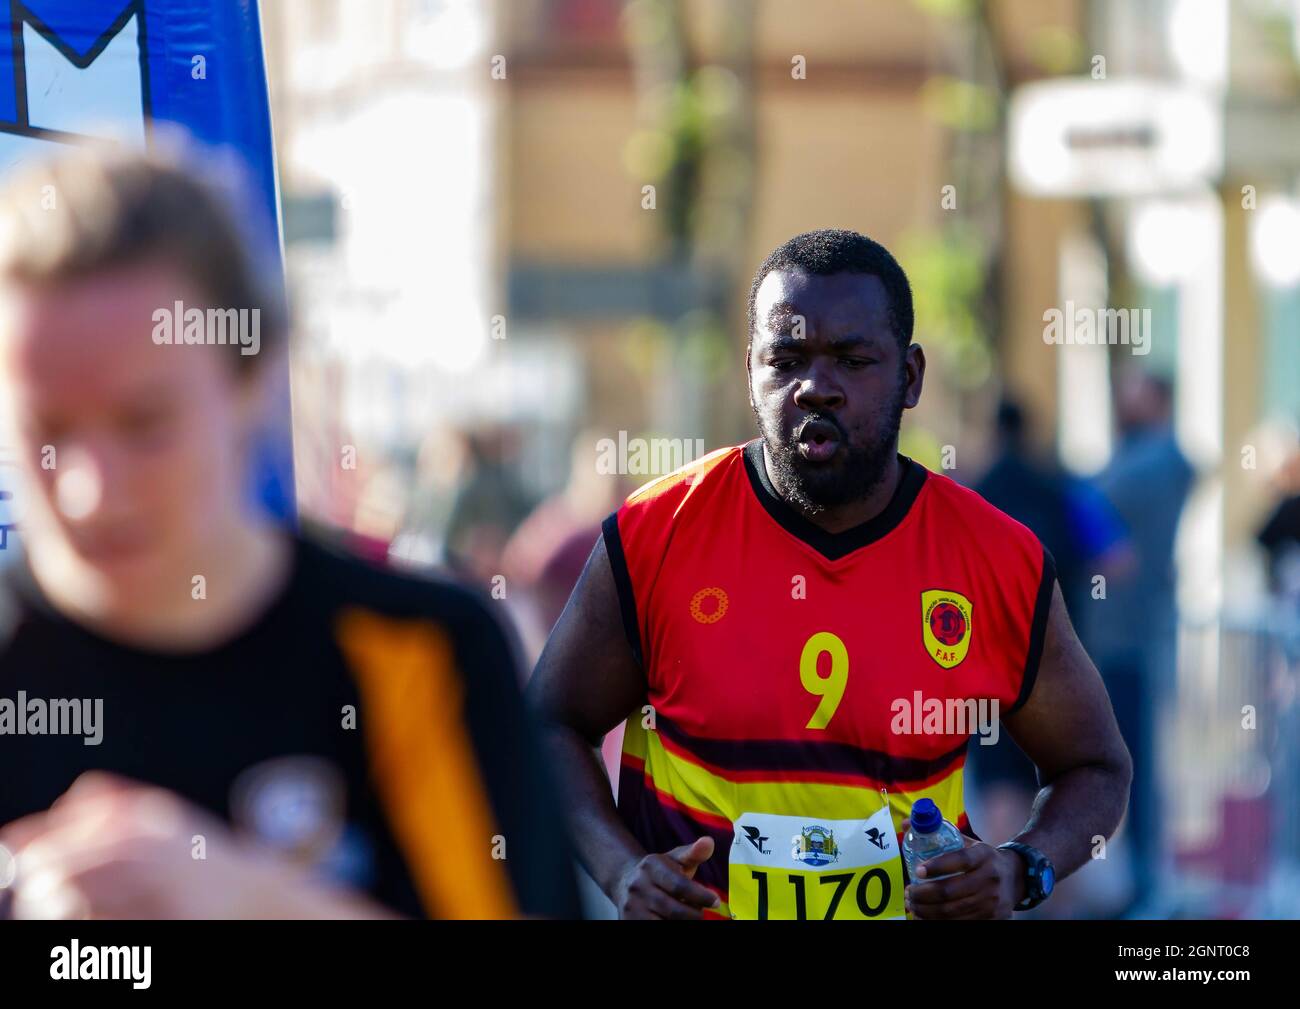 Warrington Running Festival 2021 - man gasps as he crosse the line Stock Photo